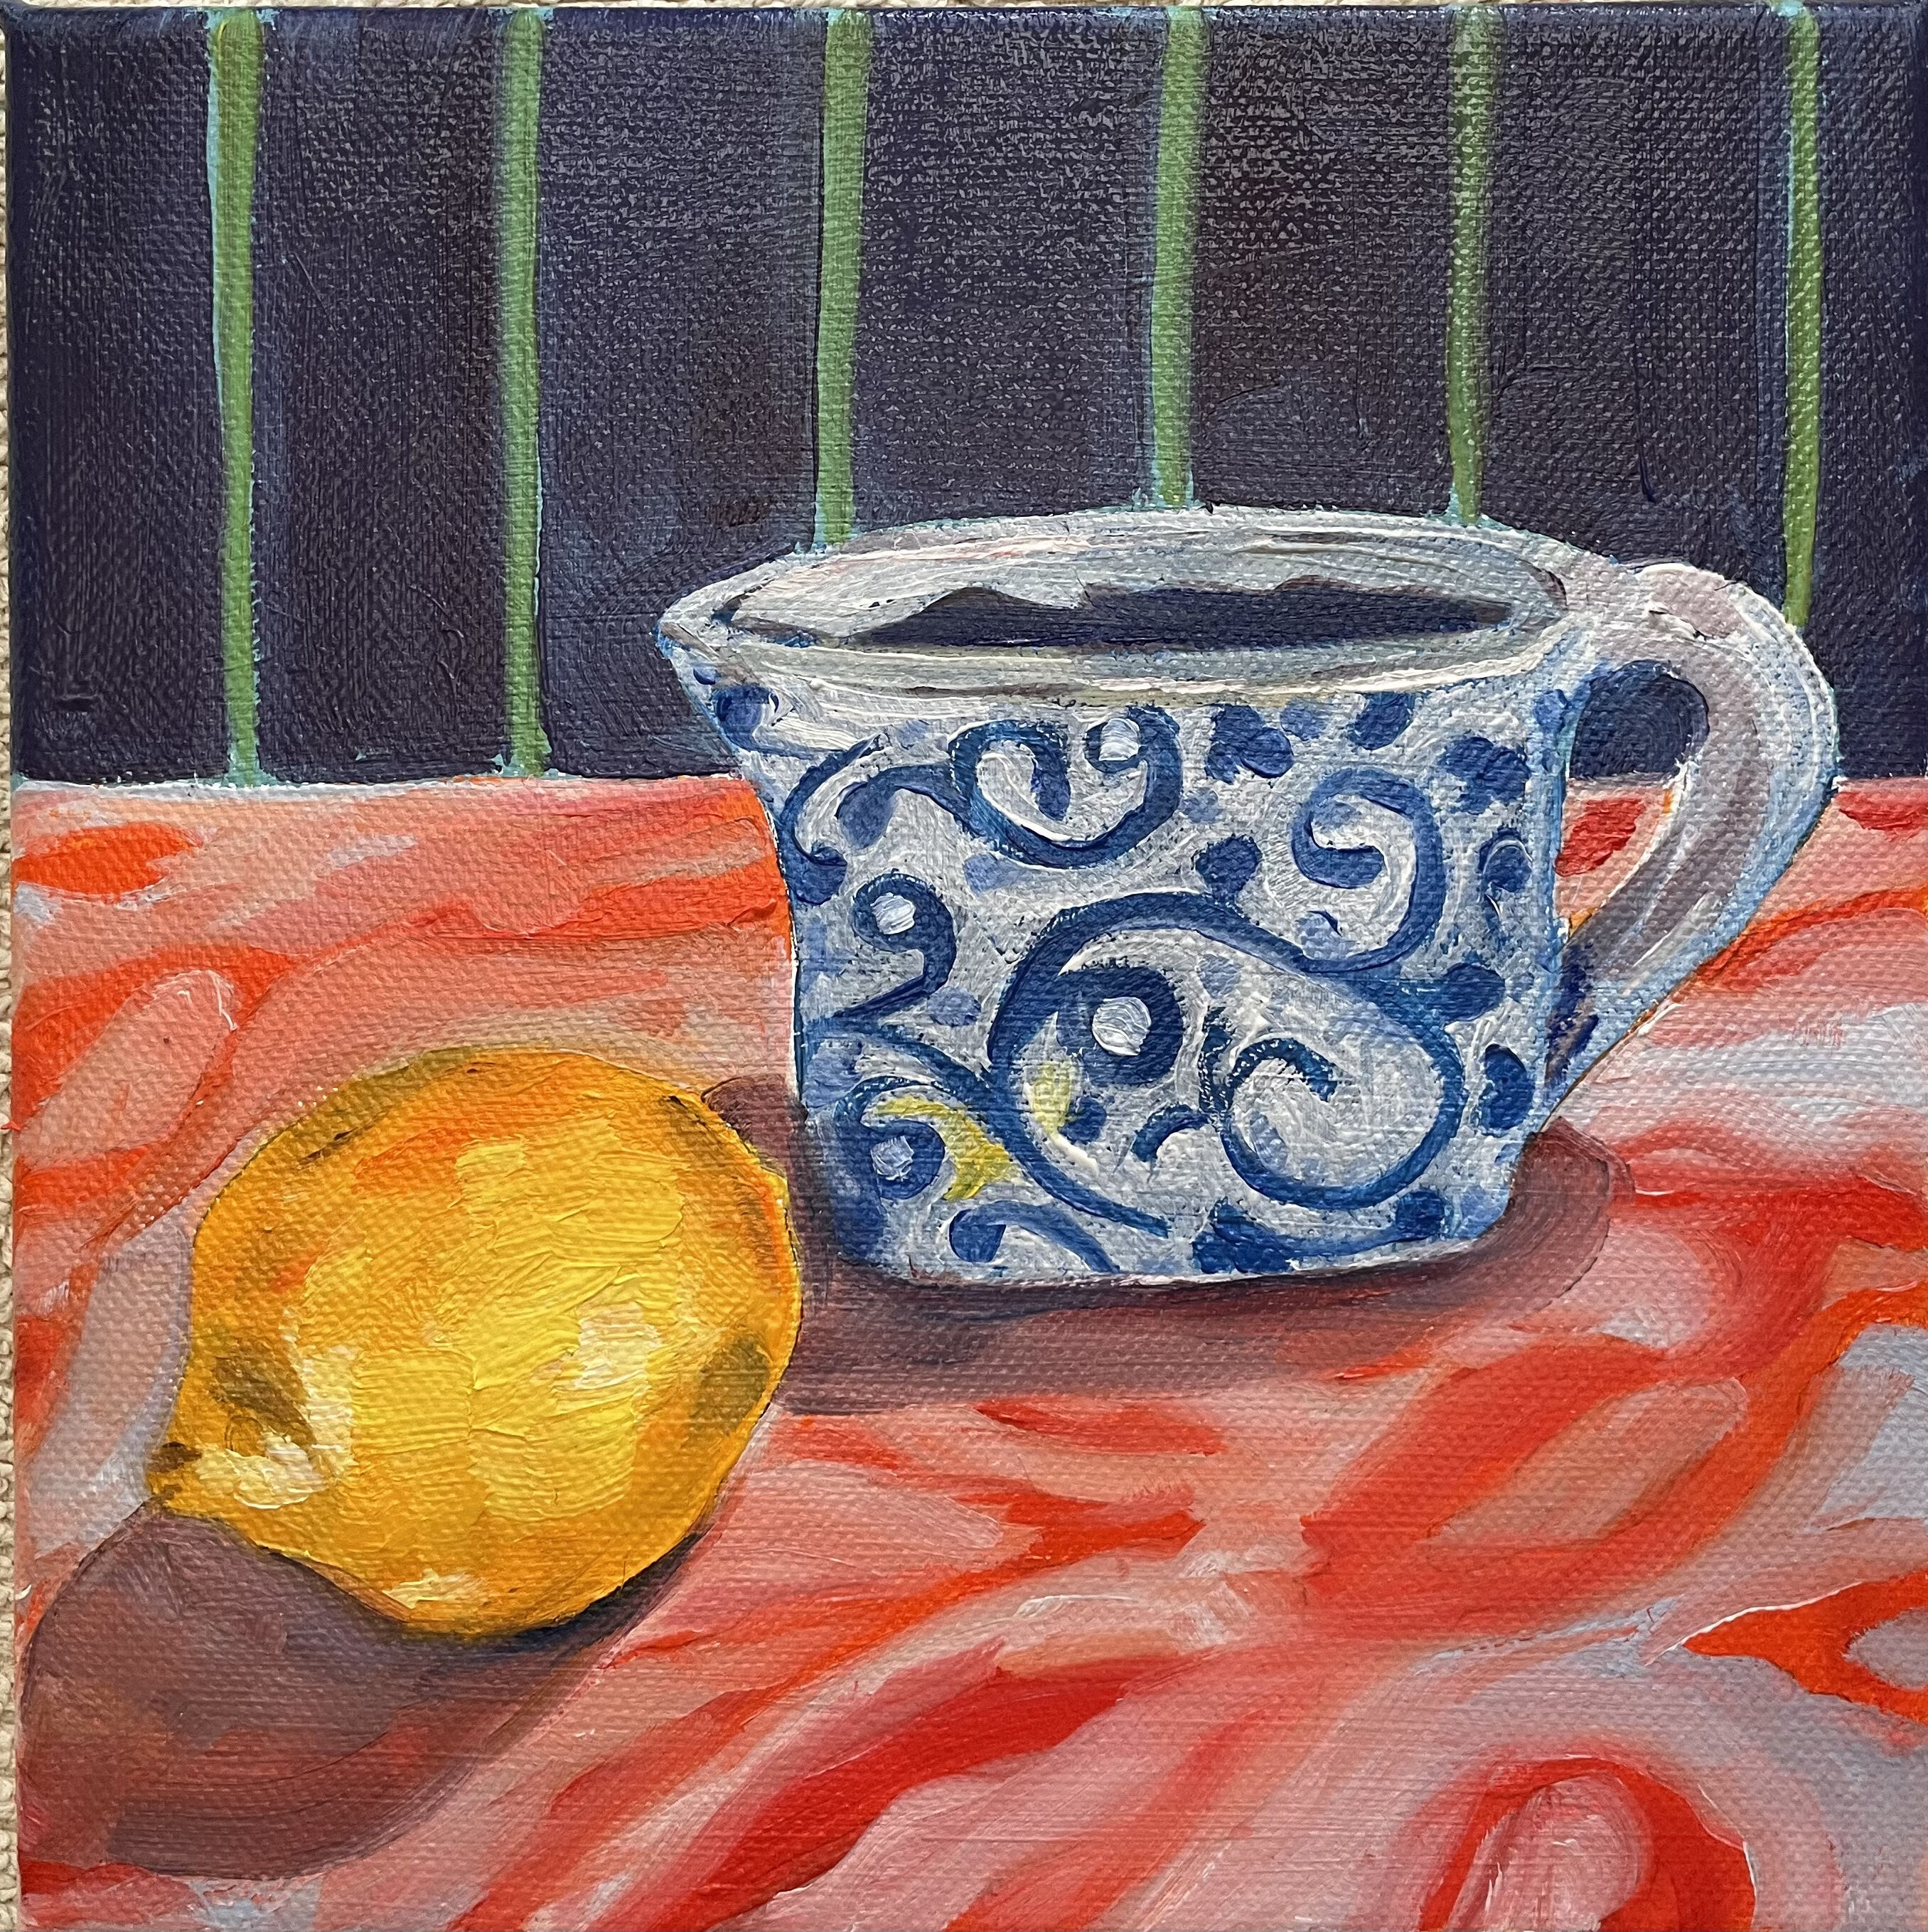 Lemon with blue jug